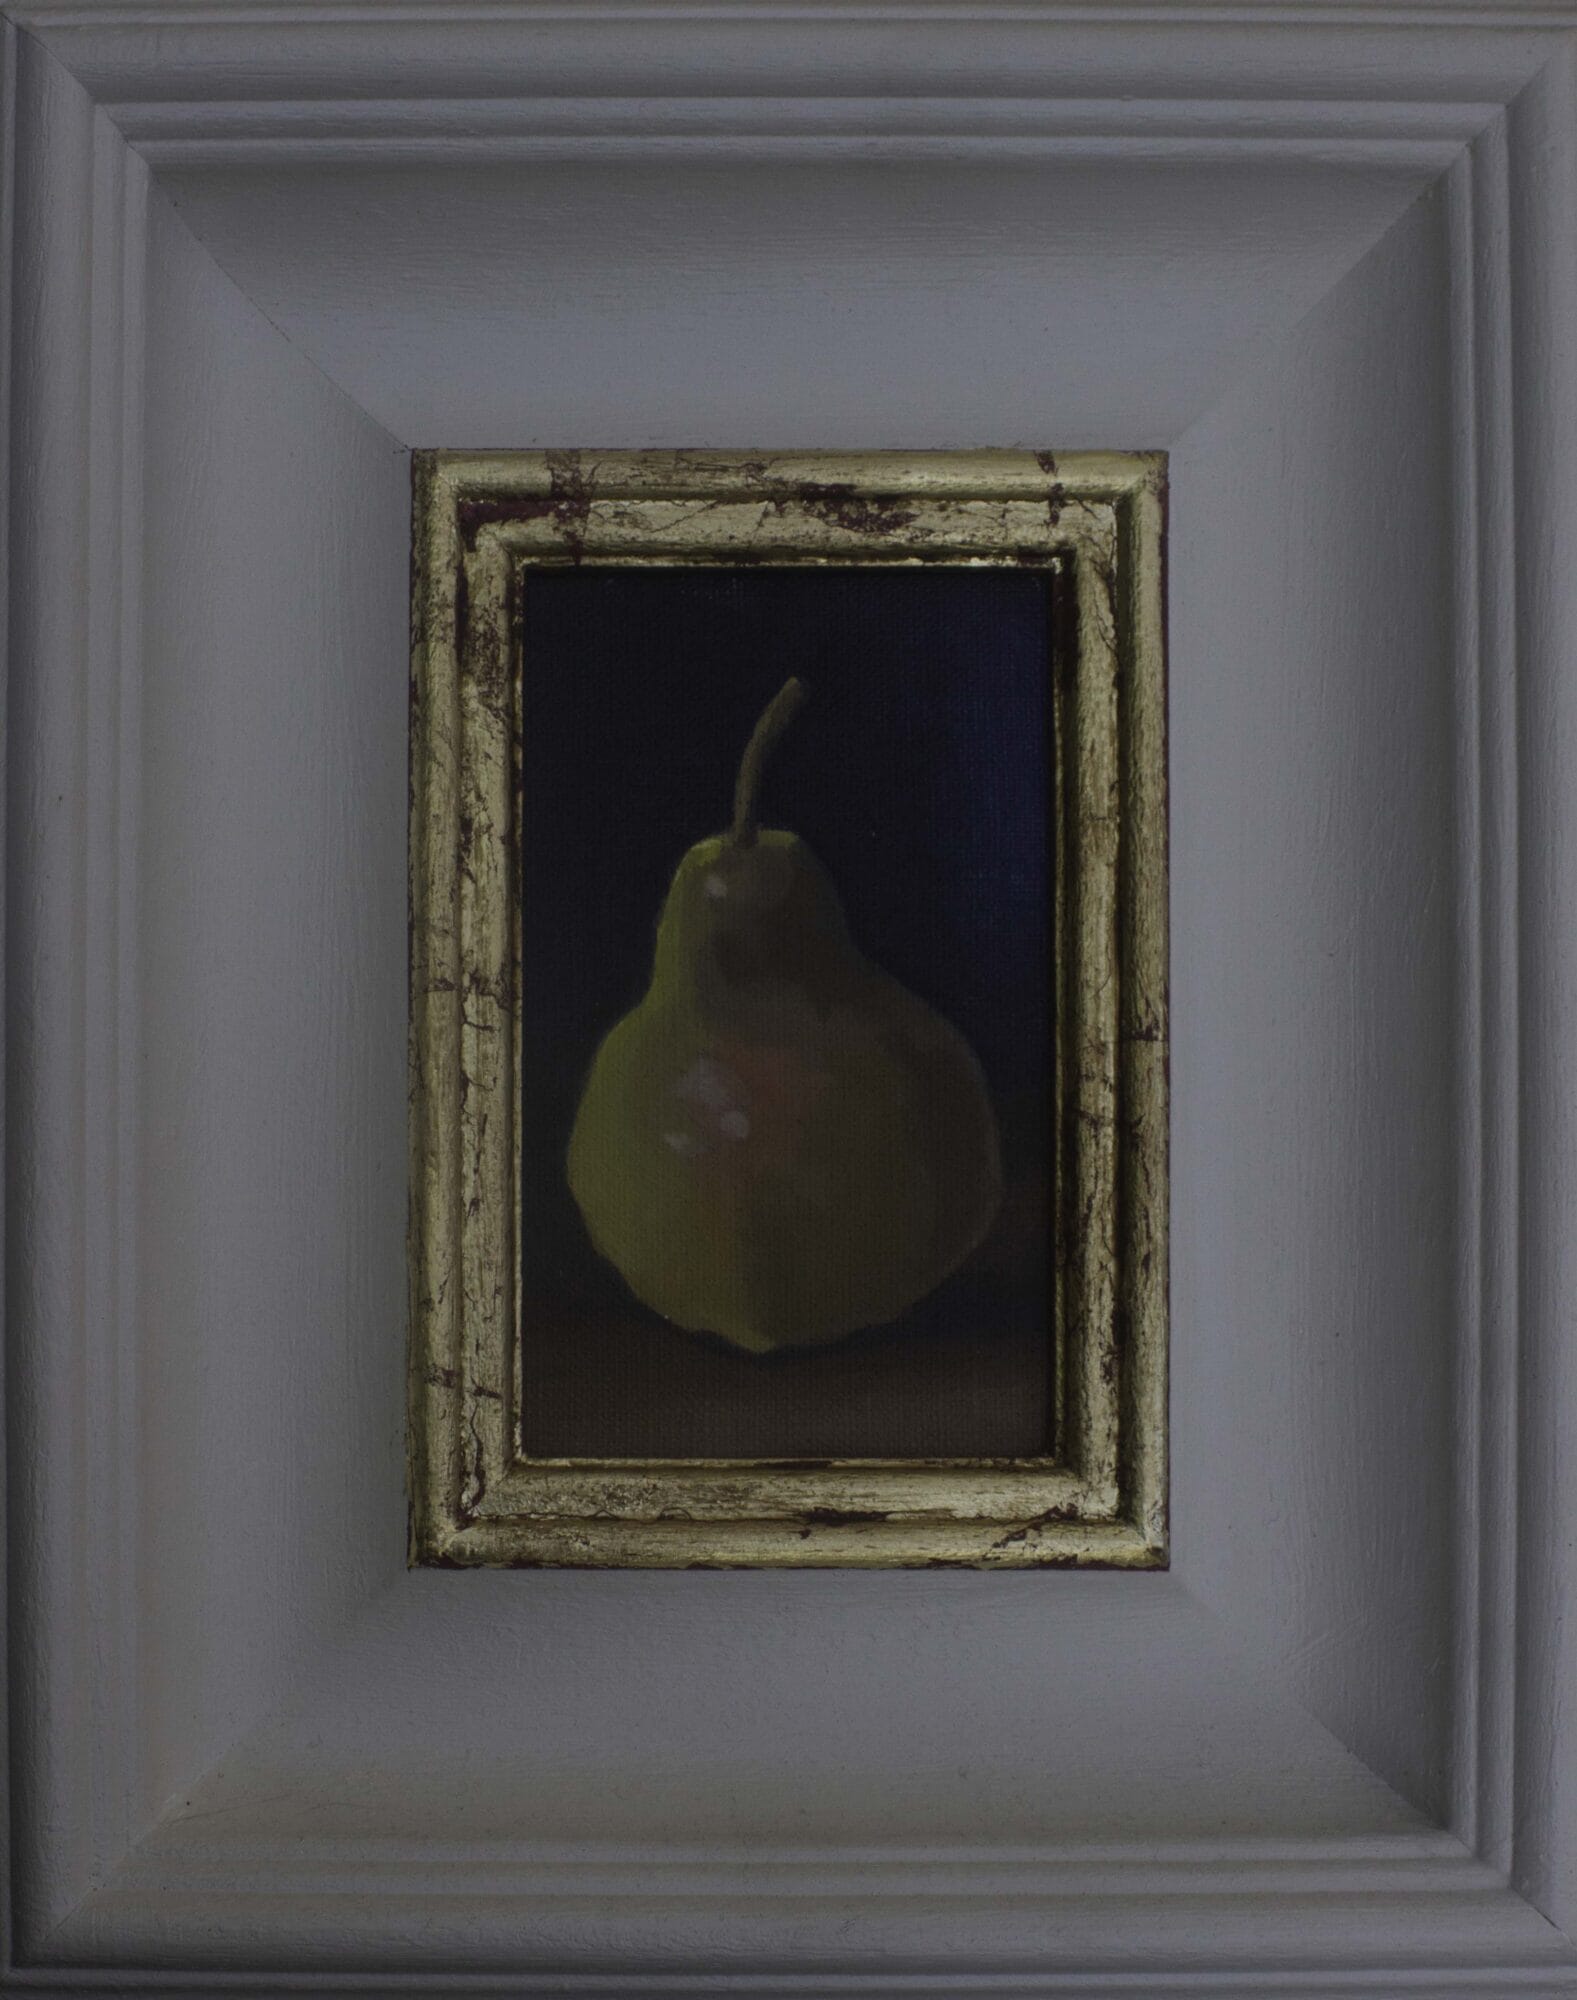  Pear